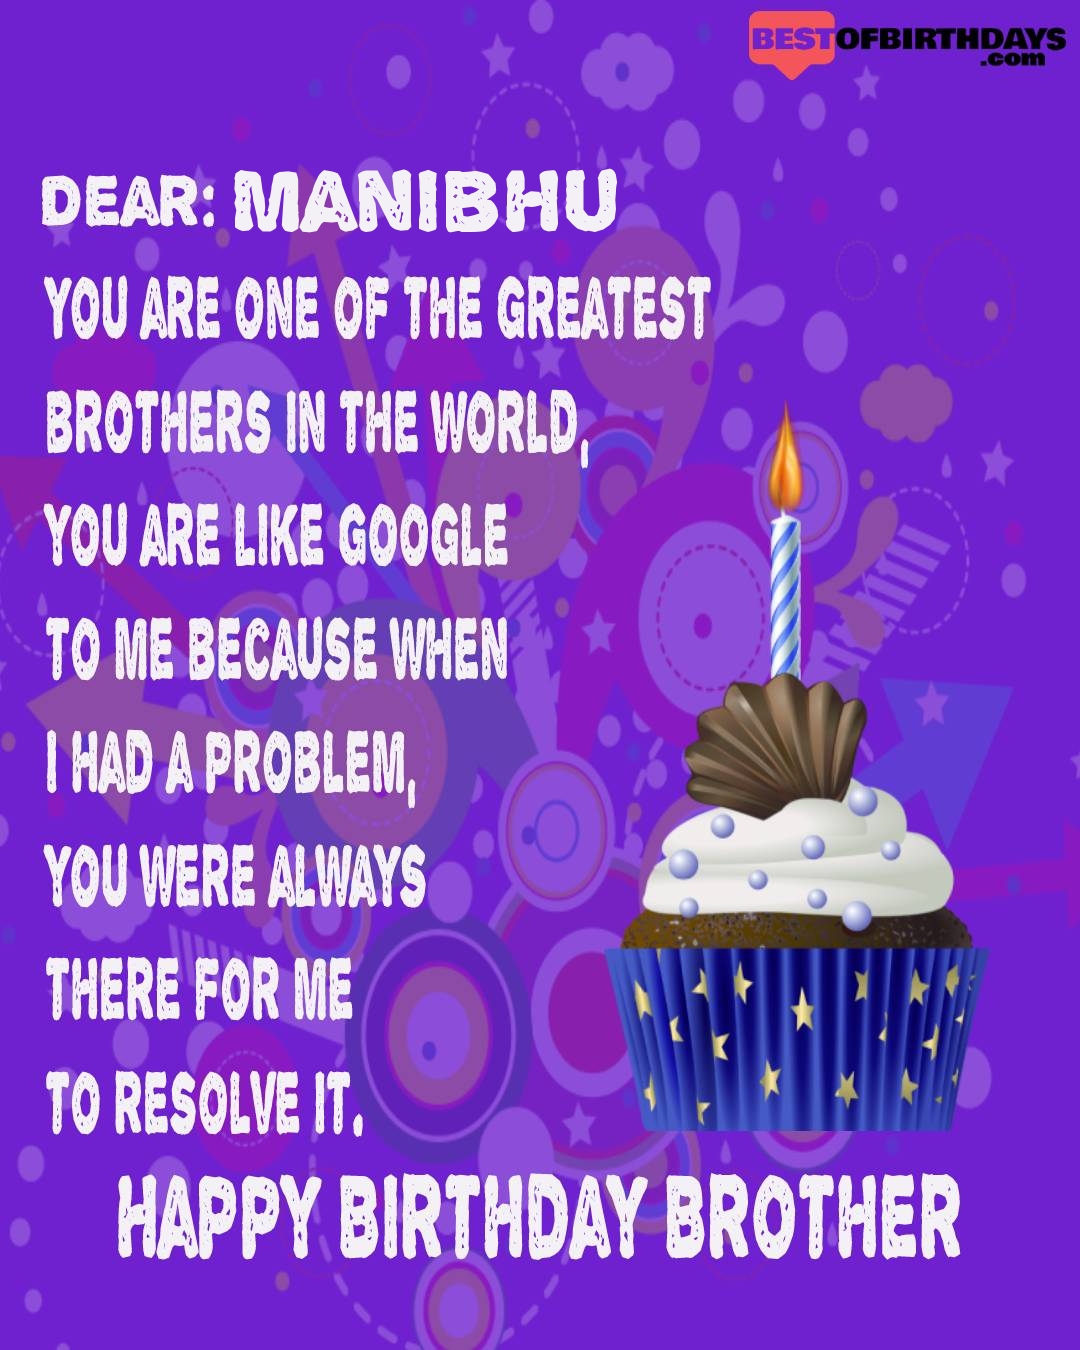 Happy birthday manibhu bhai brother bro